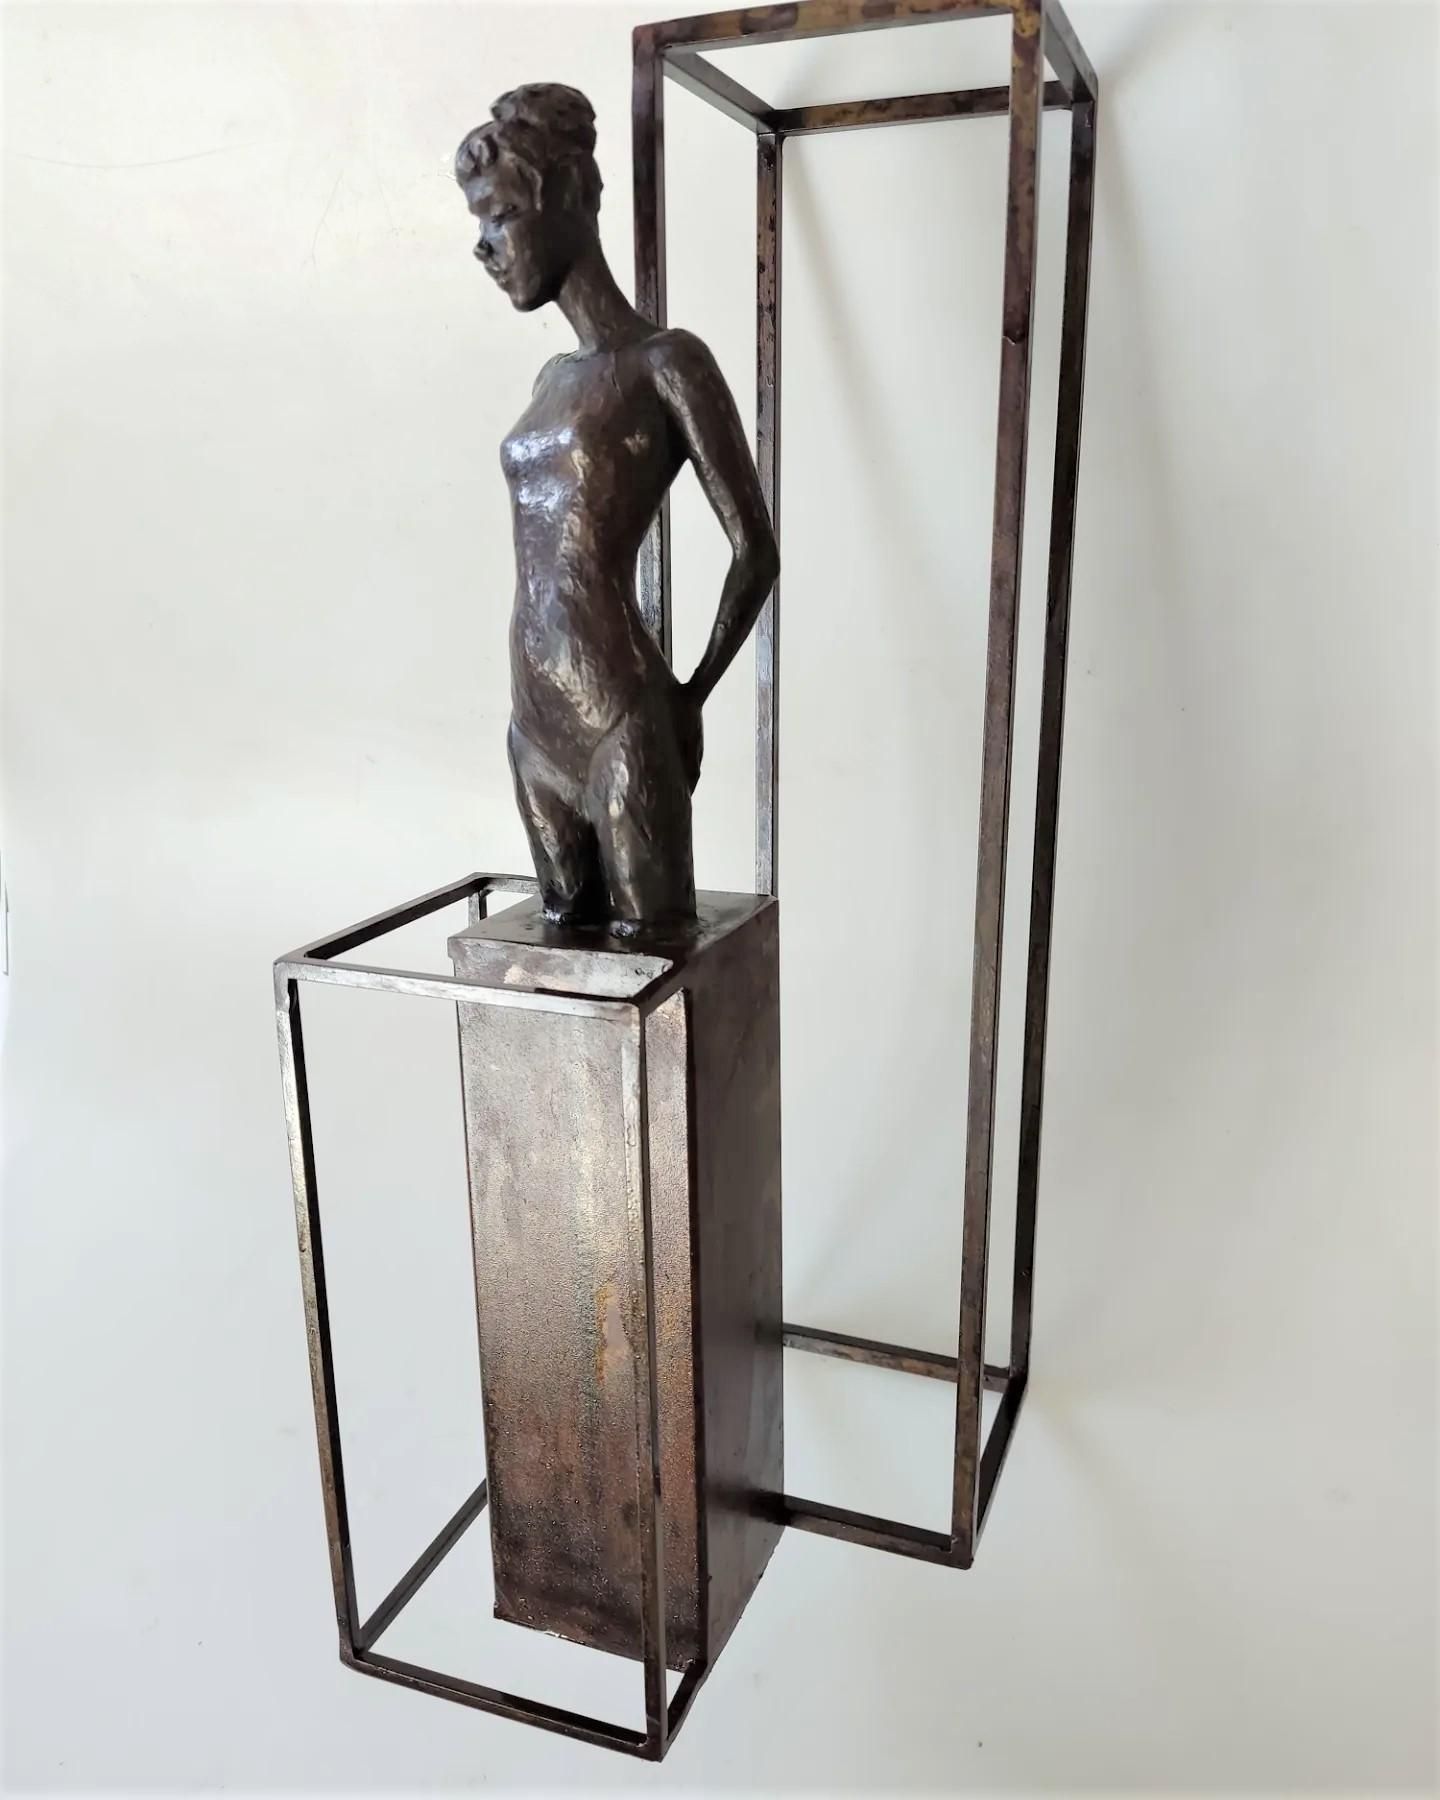 Joan Artigas Planas Figurative Sculpture - "The Swimmer" contemporary bronze table wall sculpture figurative girl swimming